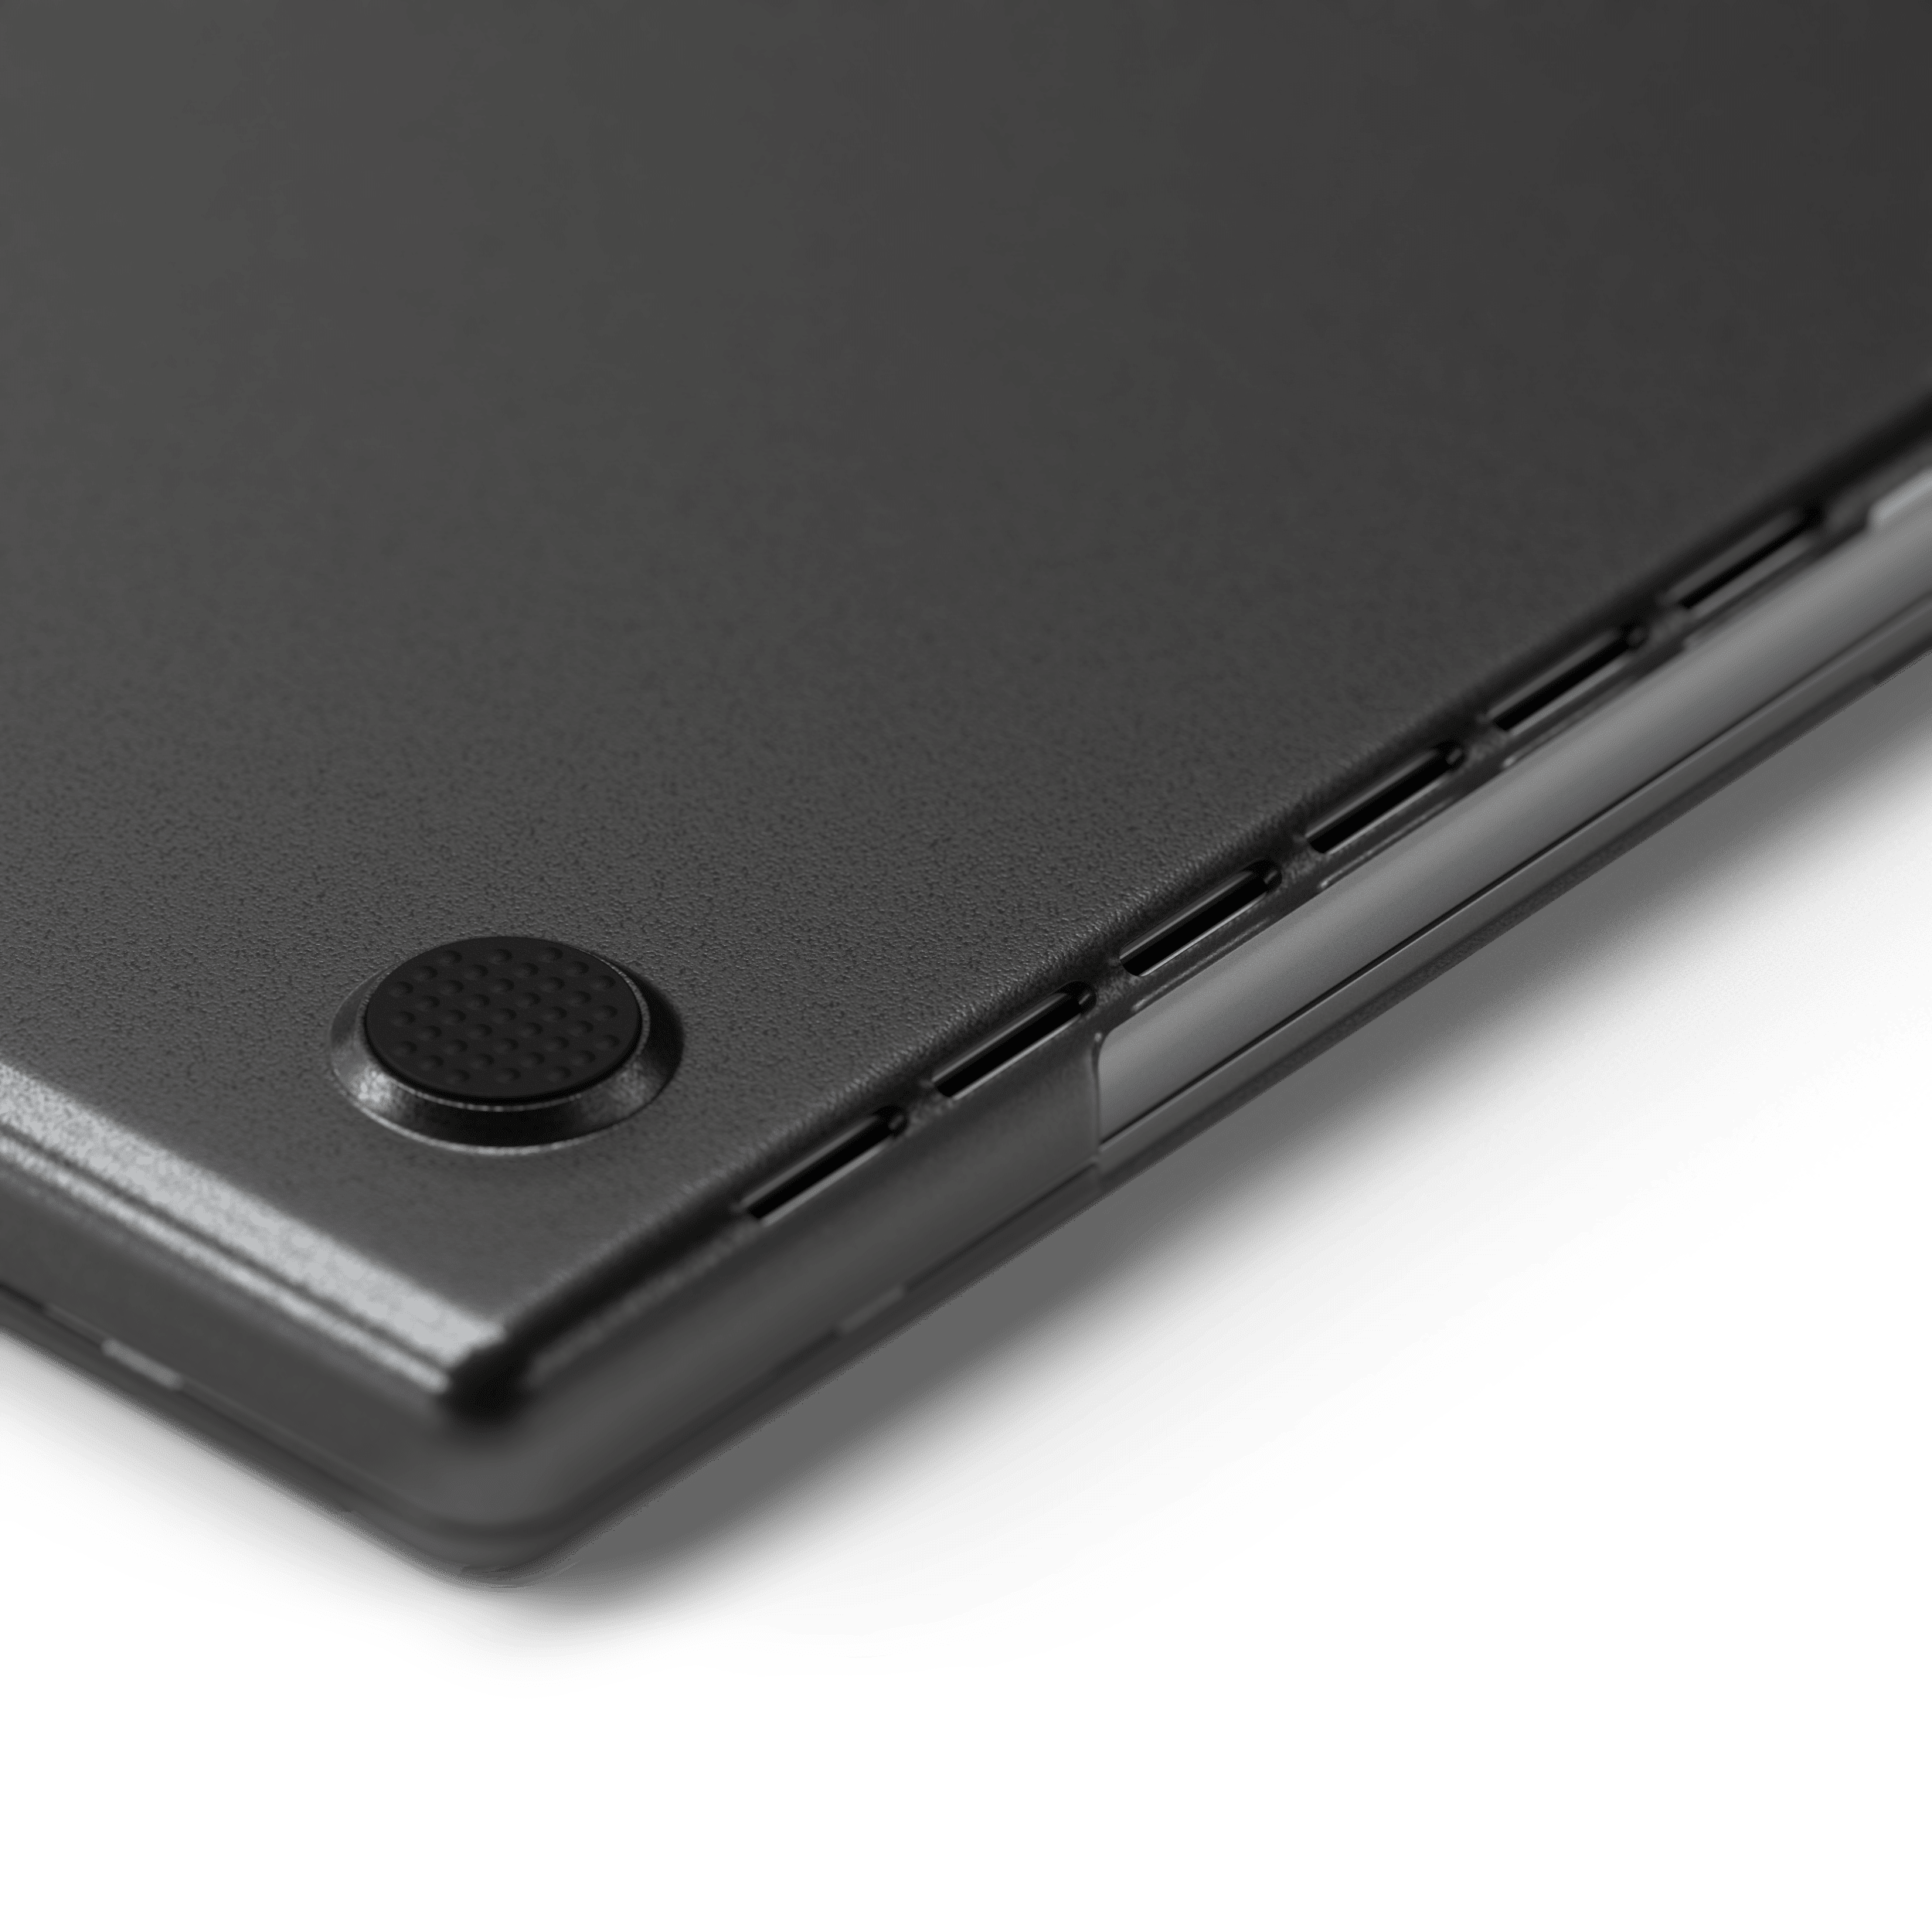 Satechi 14 inch / Dark Eco Hardshell For MacBook Pro Accessories Satechi 14 inch Dark